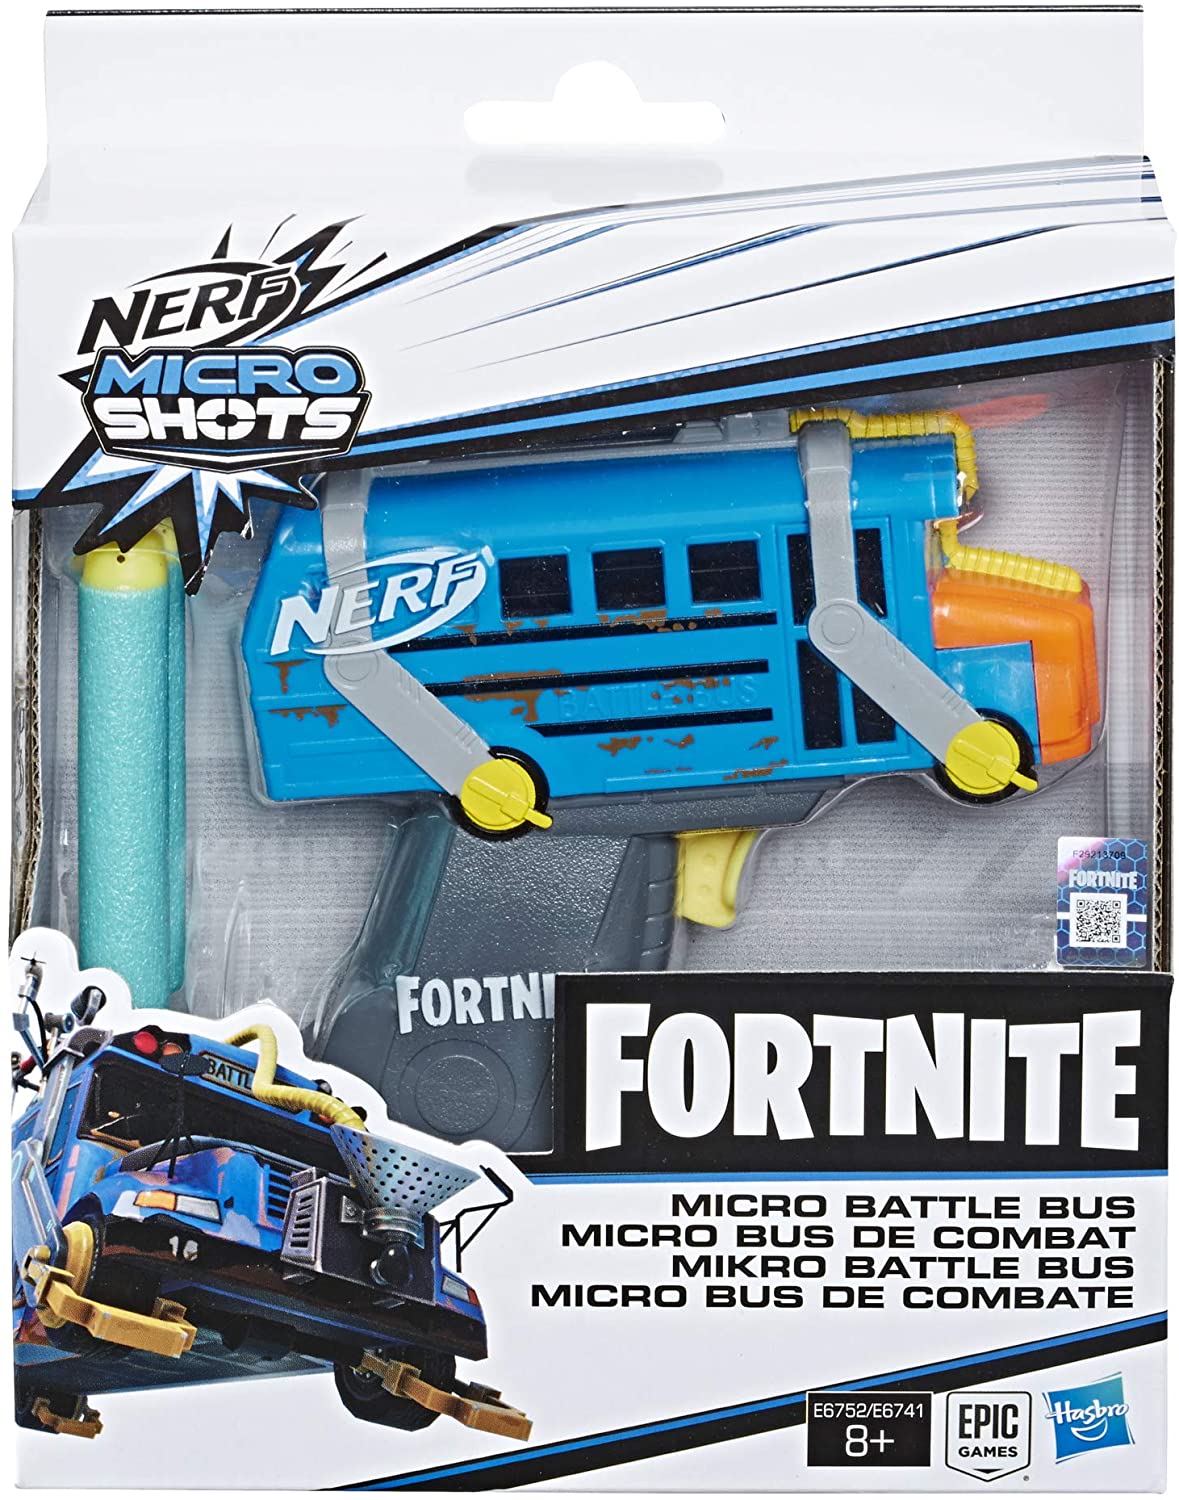 NERF MicroShots: Fortnite Micro Battle Bus